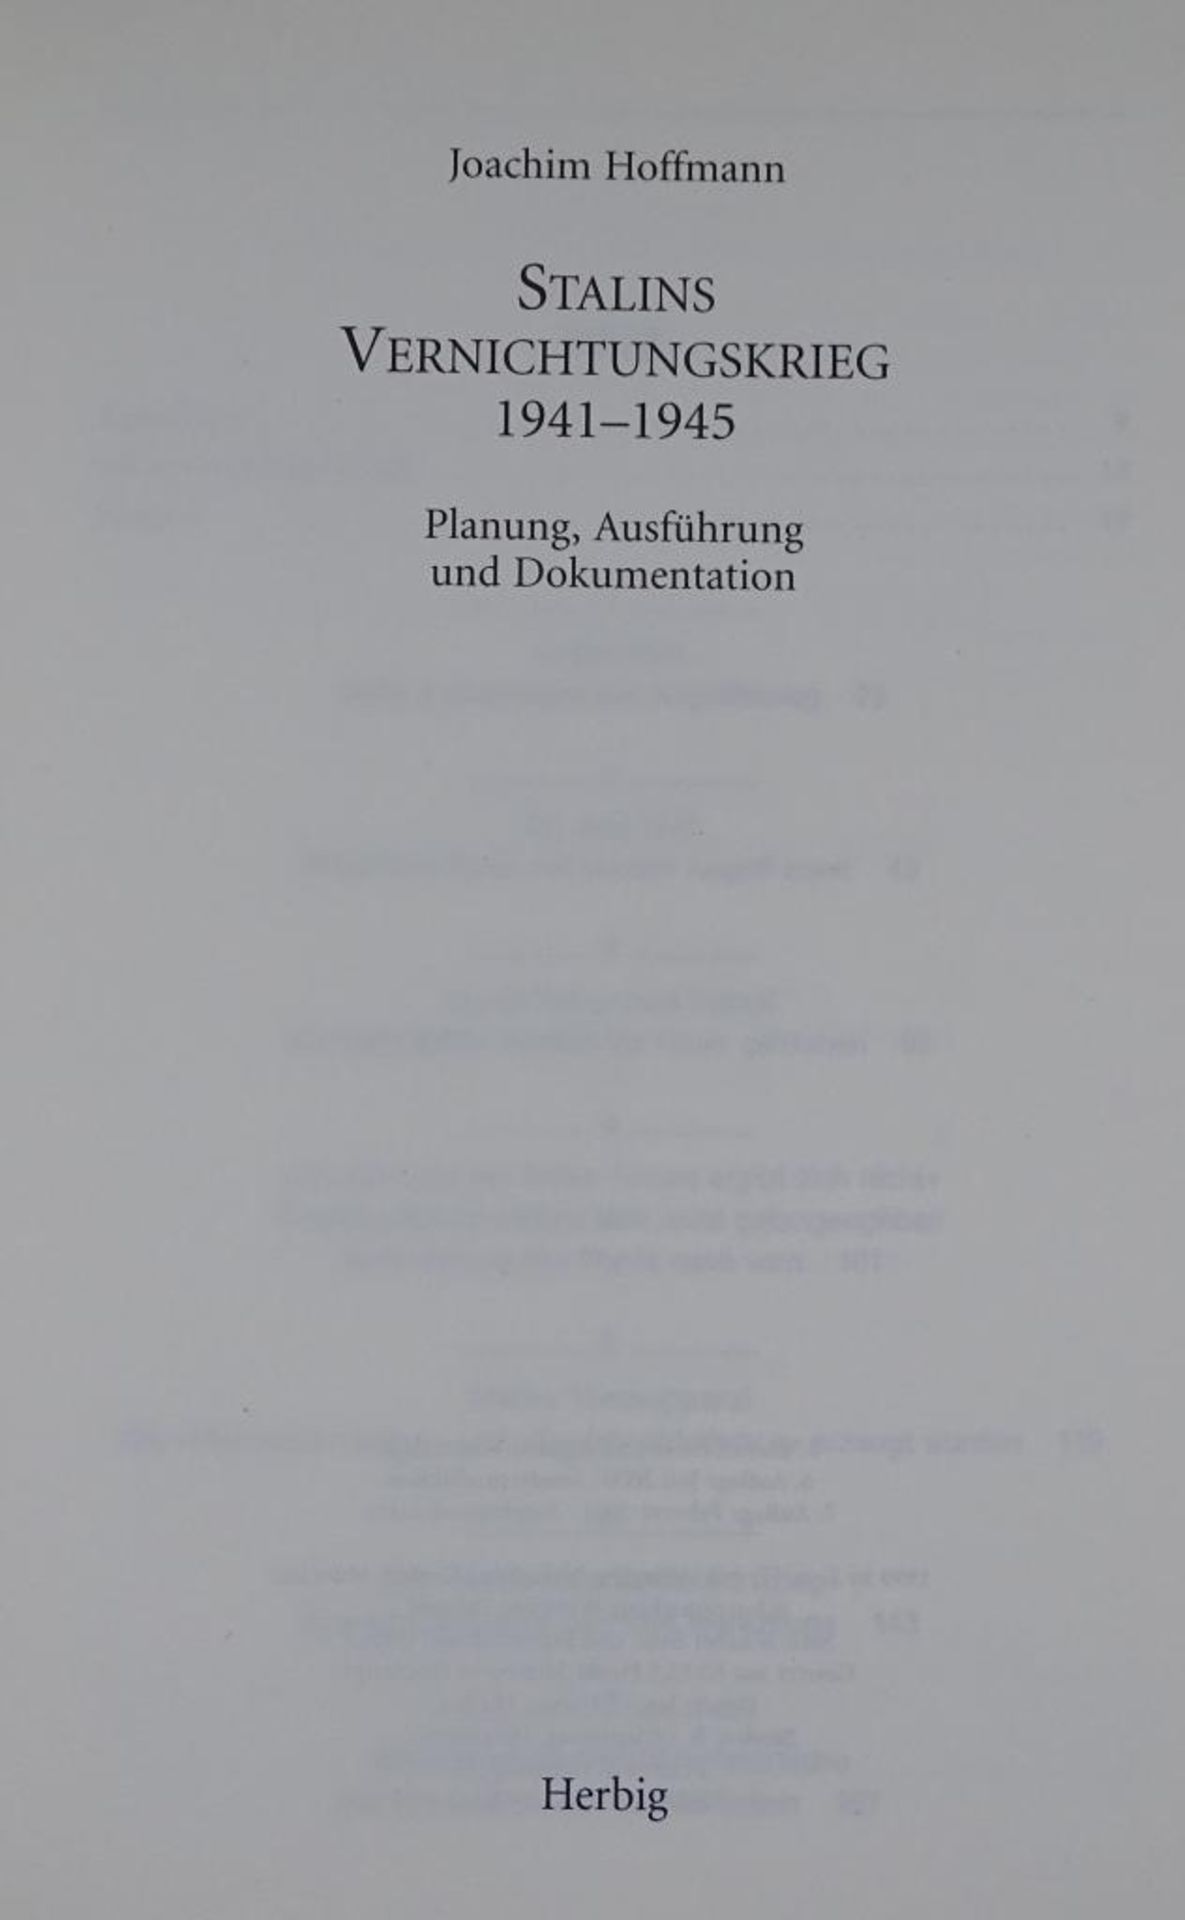 Stalins Vernichtungskrieg 1941-1945, Planung,Ausführung und Dokumentation"-Joachim Hoffman - Bild 2 aus 7